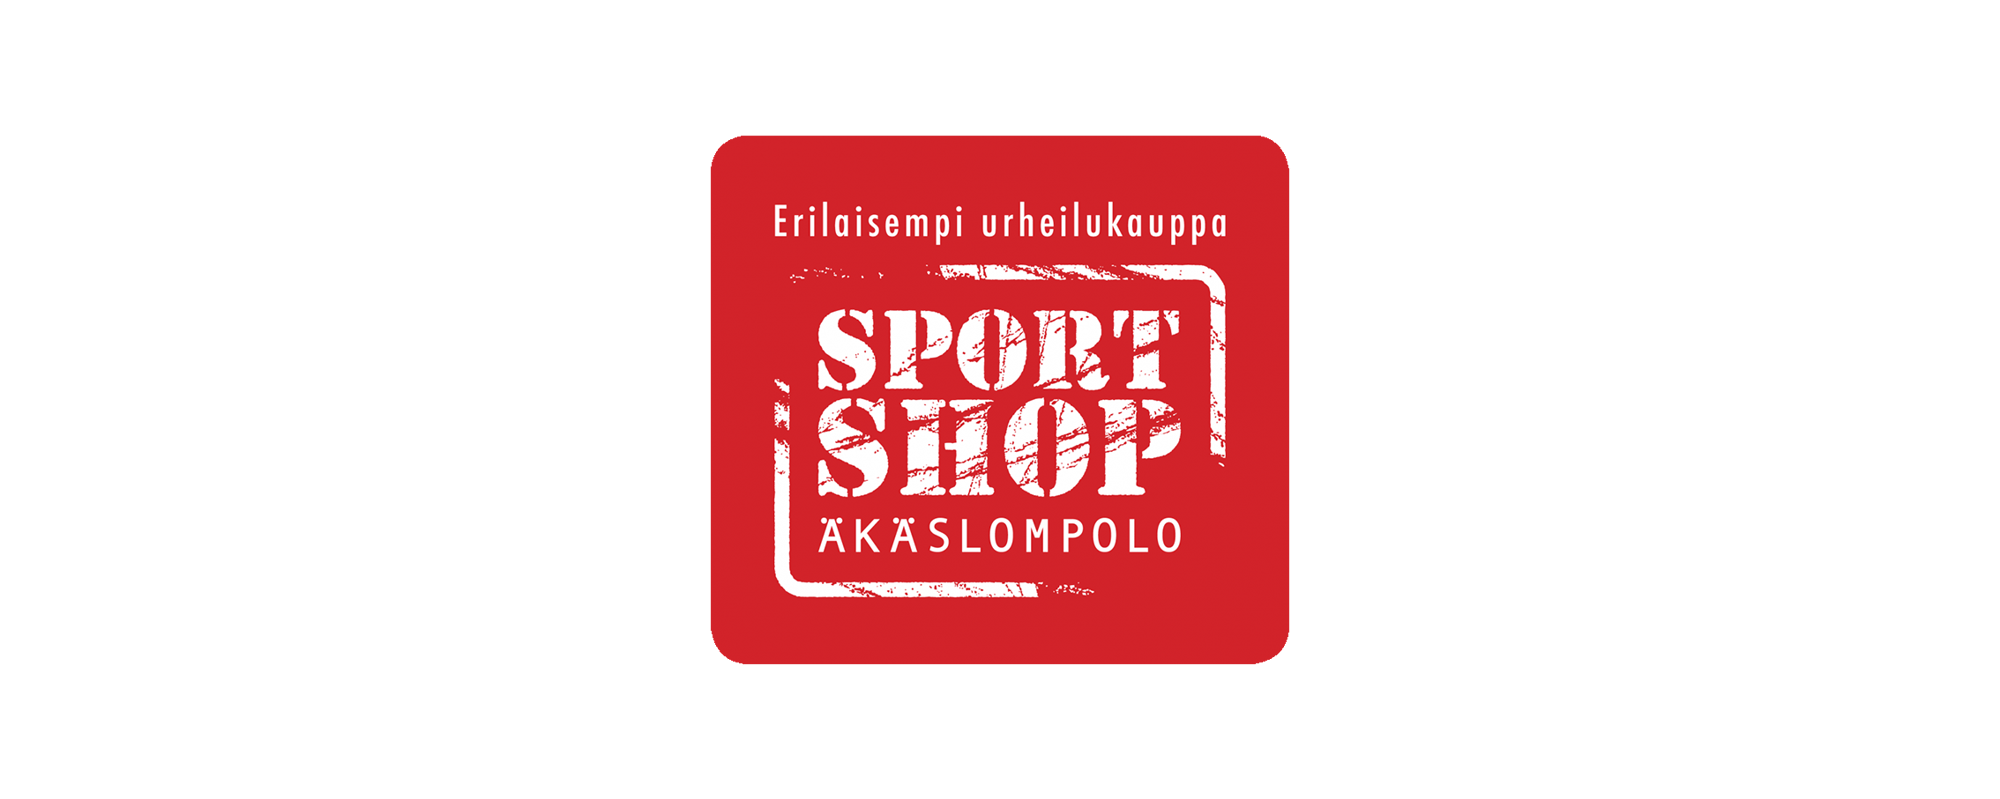 The logo of Äkäslompolo Sportshop.